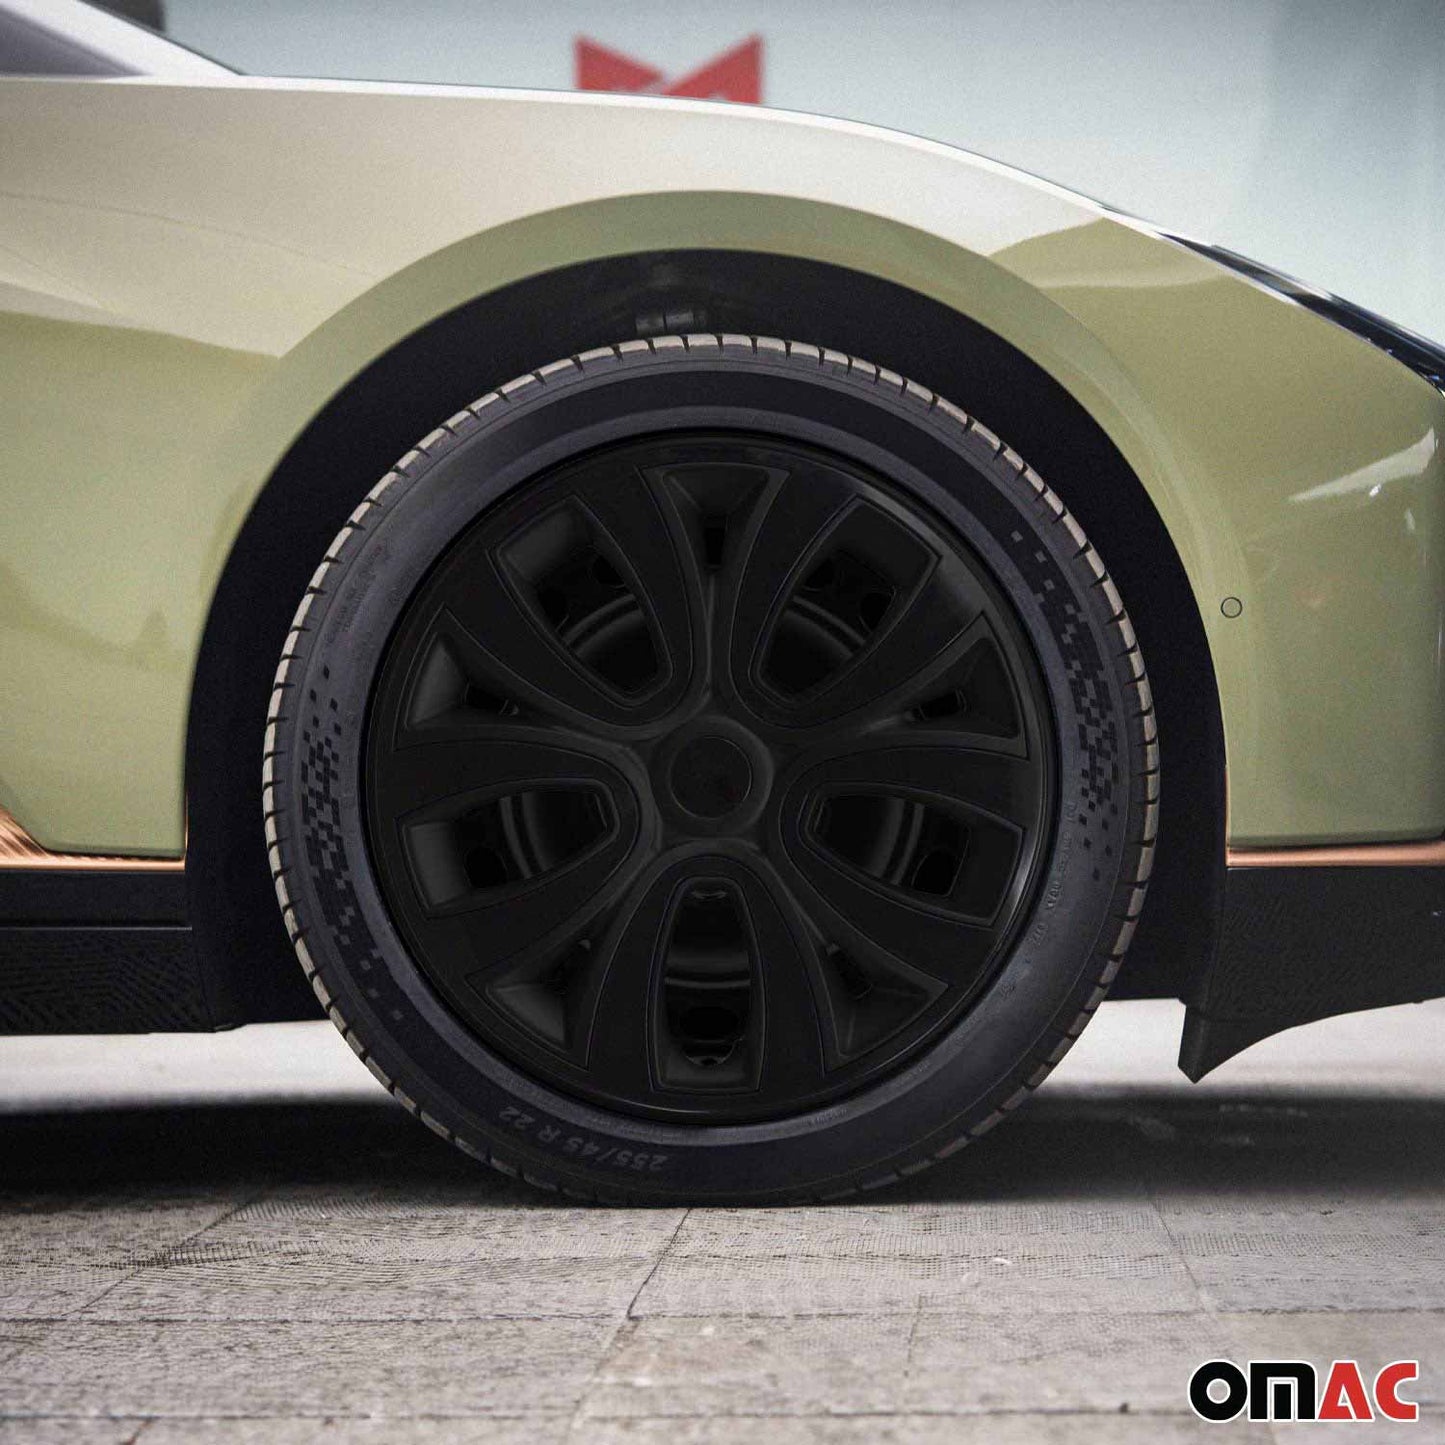 OMAC 16" Hubcaps Wheel Rim Cover Glossy Black with Black Insert 4pcs Set 99FR241B16S